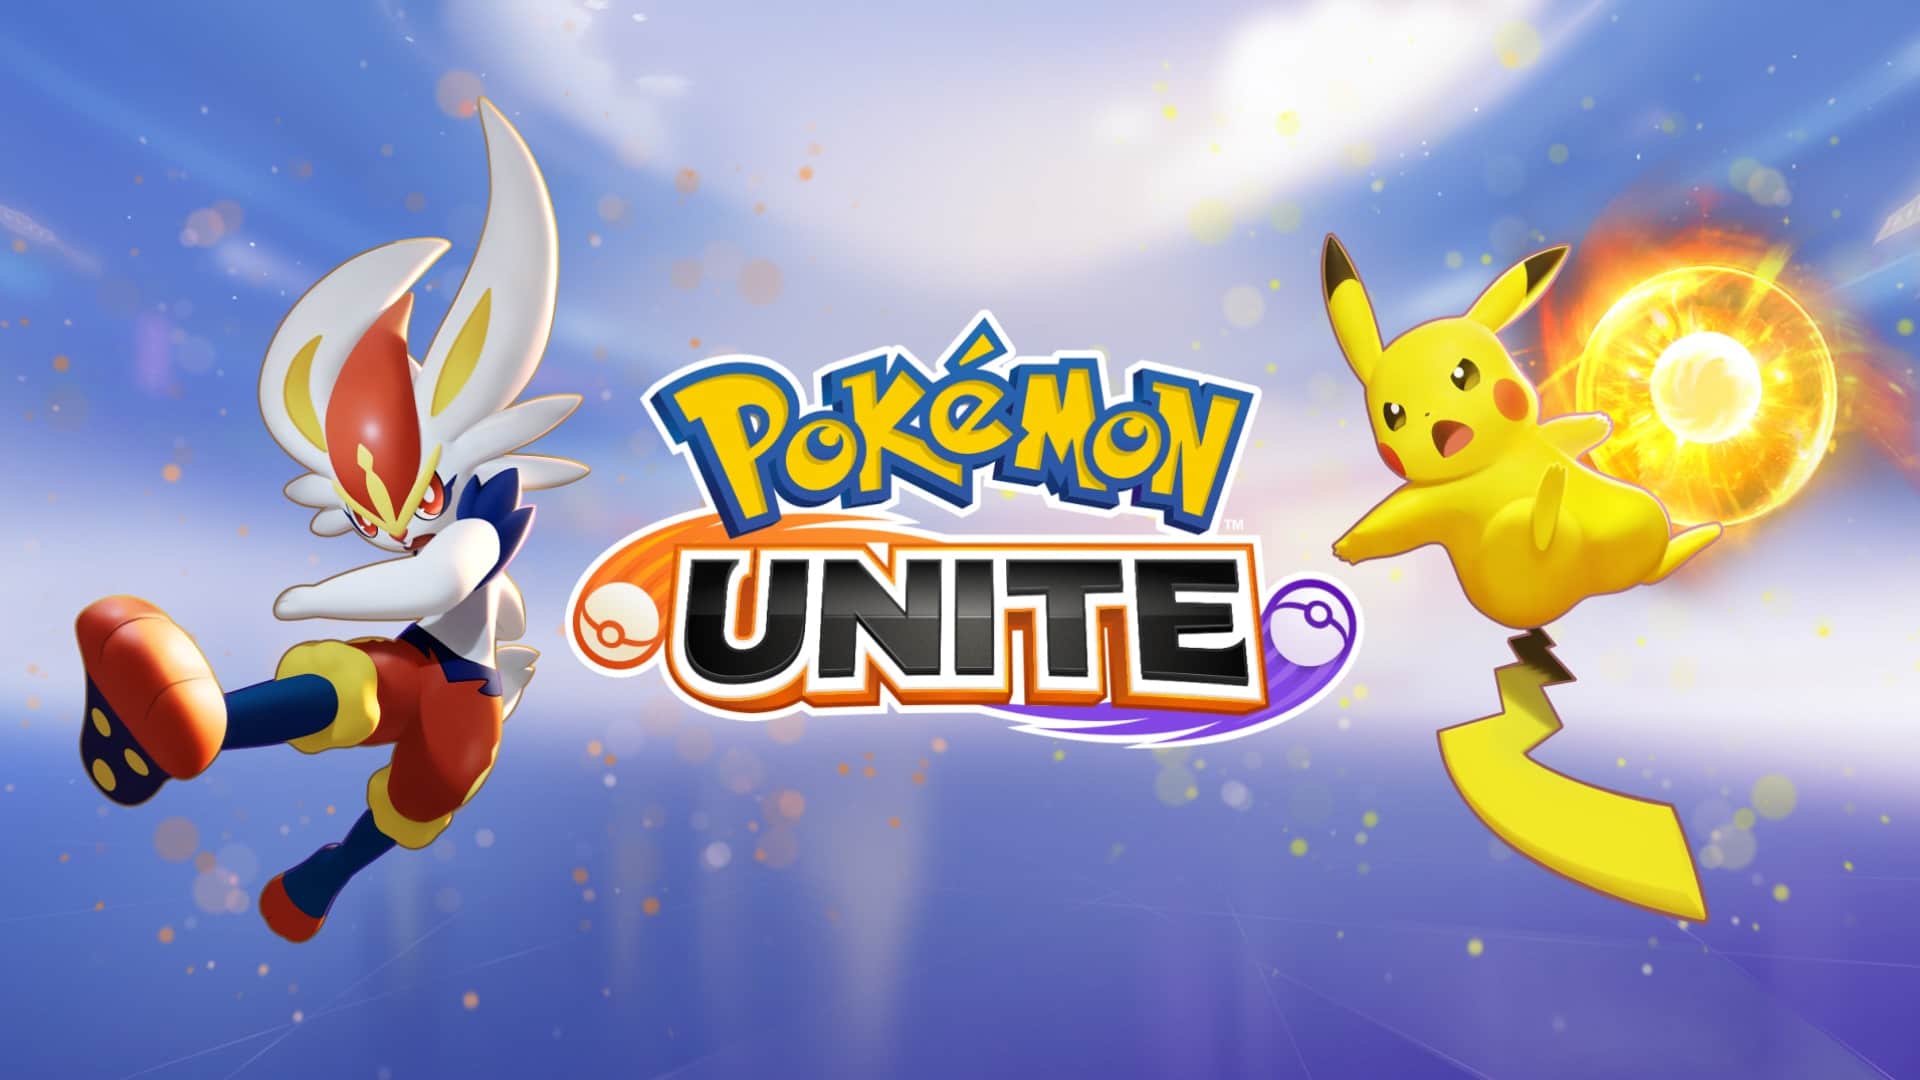 A new Pokémon appears in the Pokémon Unite code